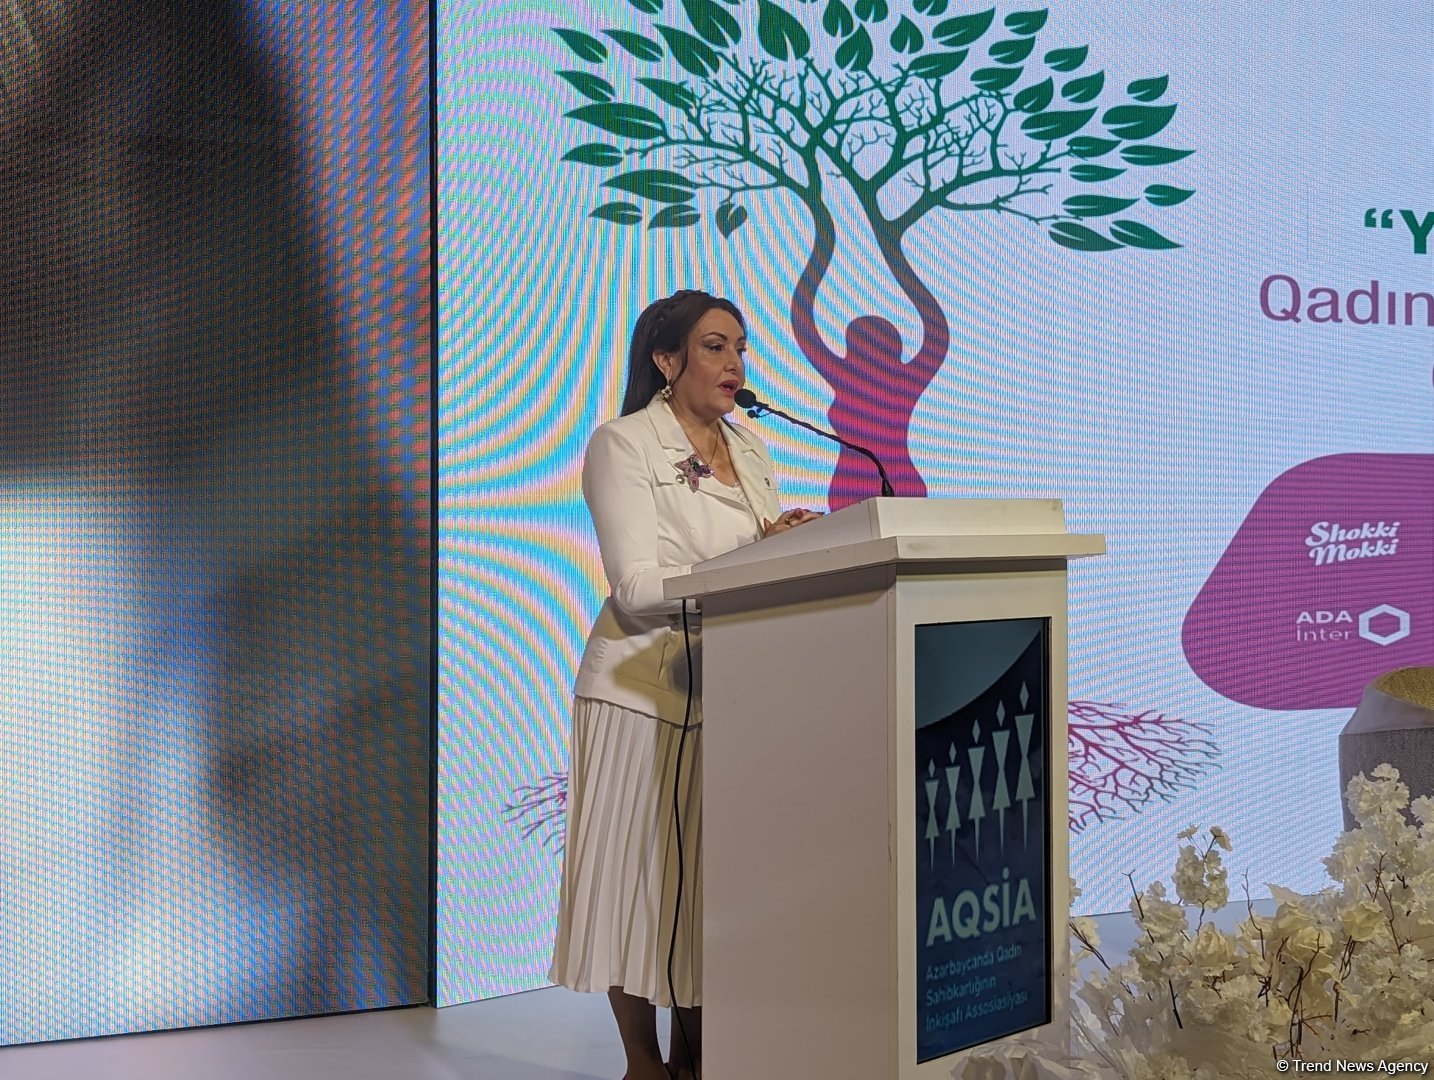 Azerbaijan's Khojavend welcomes woman entrepreneur from AQSIA